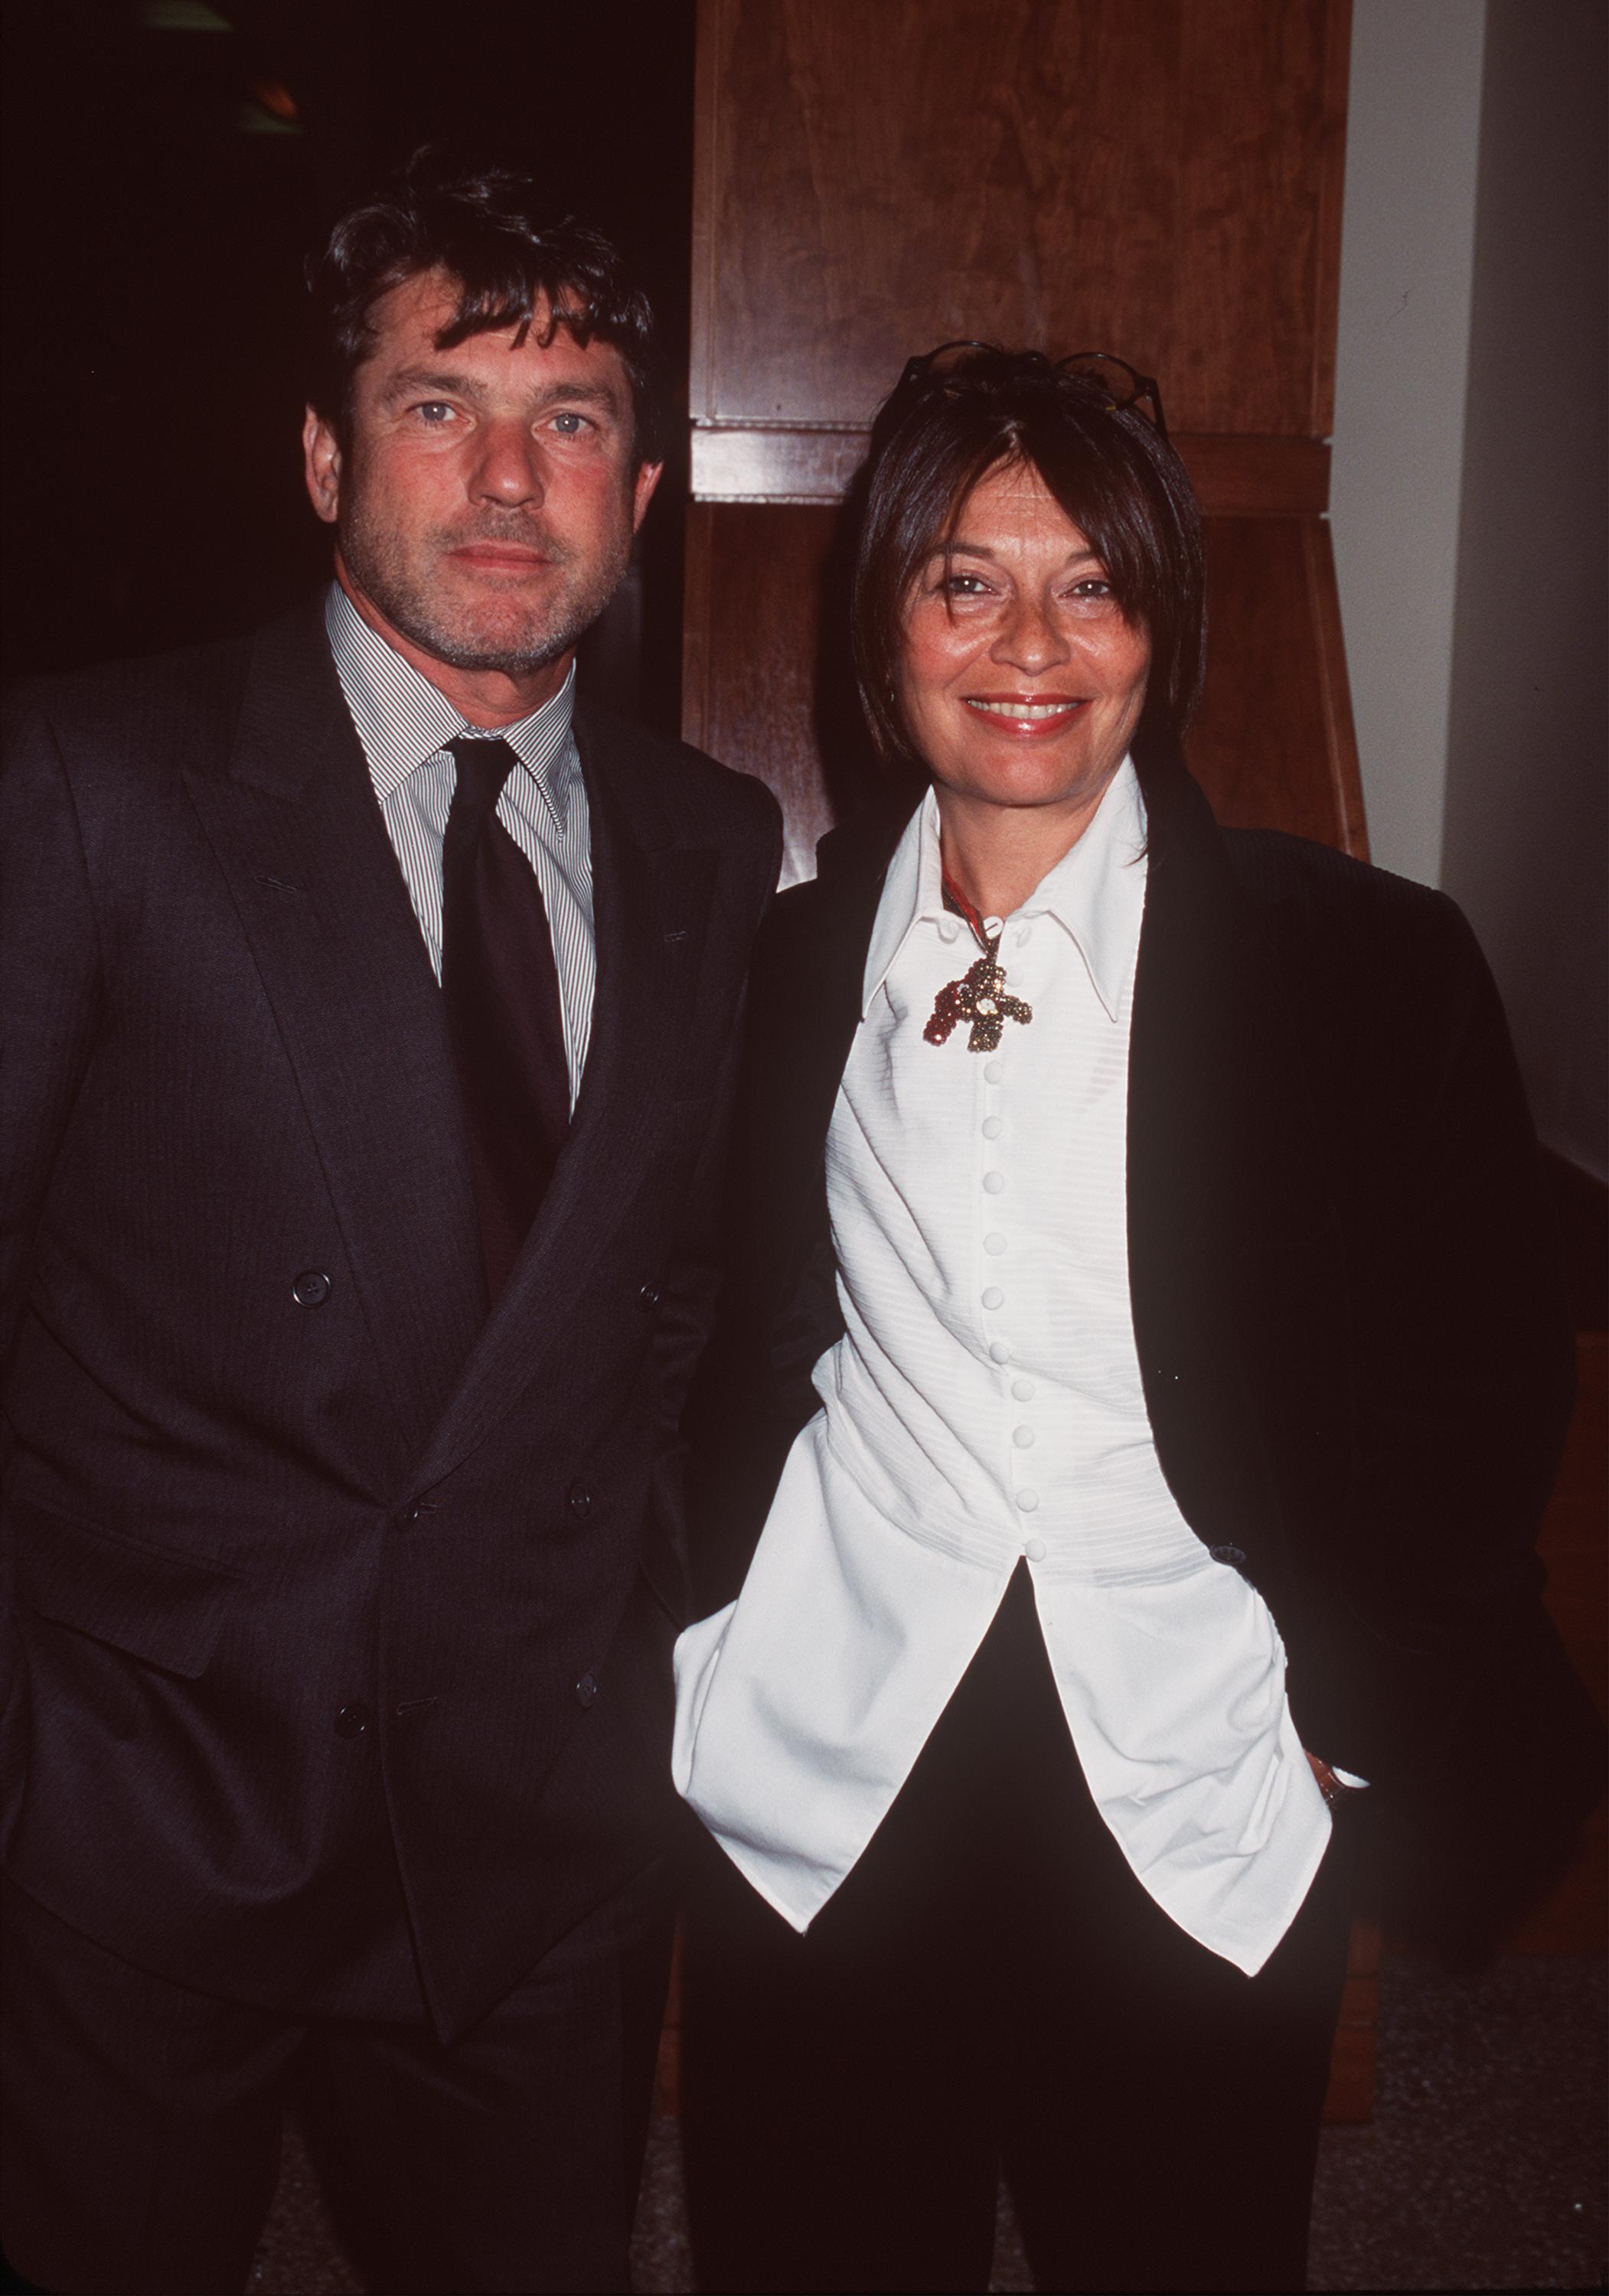 Jann Wenner and Jane Schindelheim attend Amnesty International's Fourth Annual Media Spotlight Awards at Chelsae Piers on September 25, 2000, in New York City. | Source: Getty Images